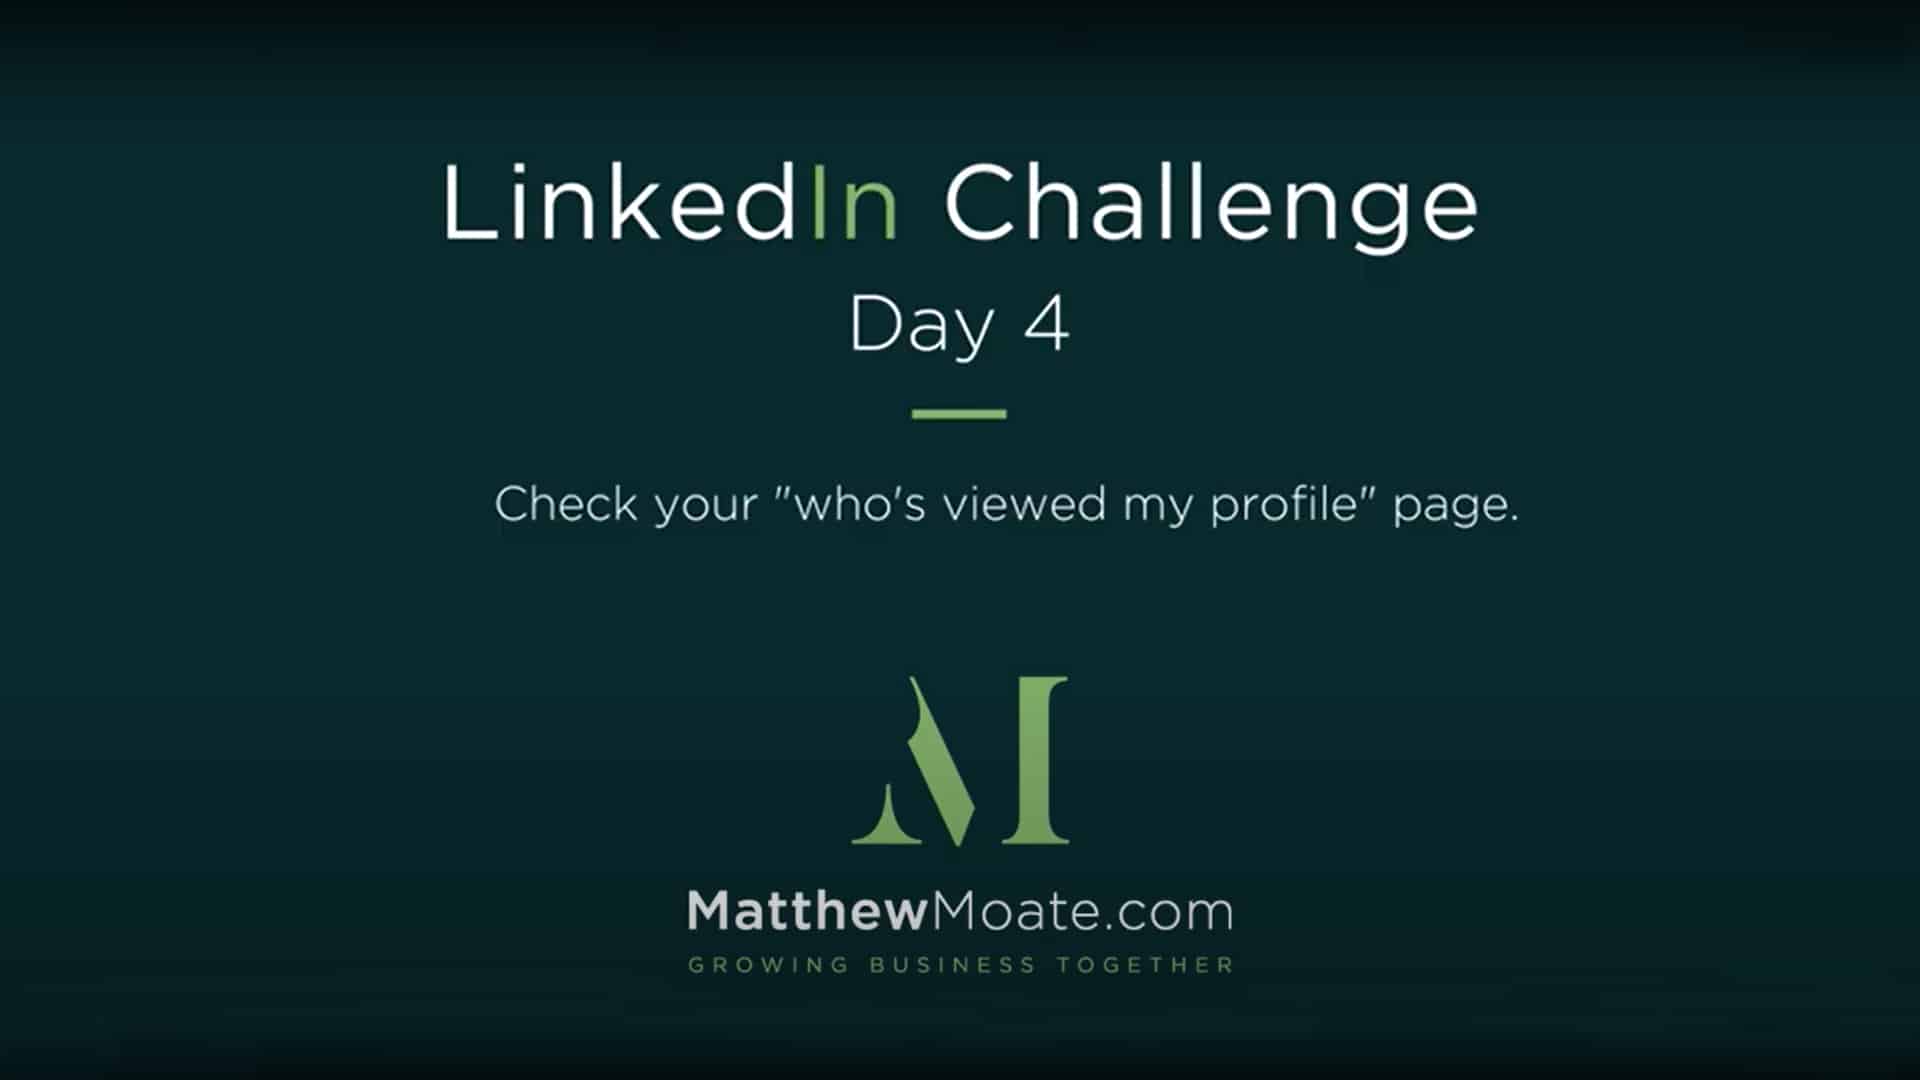 Matthew Moate's LinkedIn Challenge DAY 4